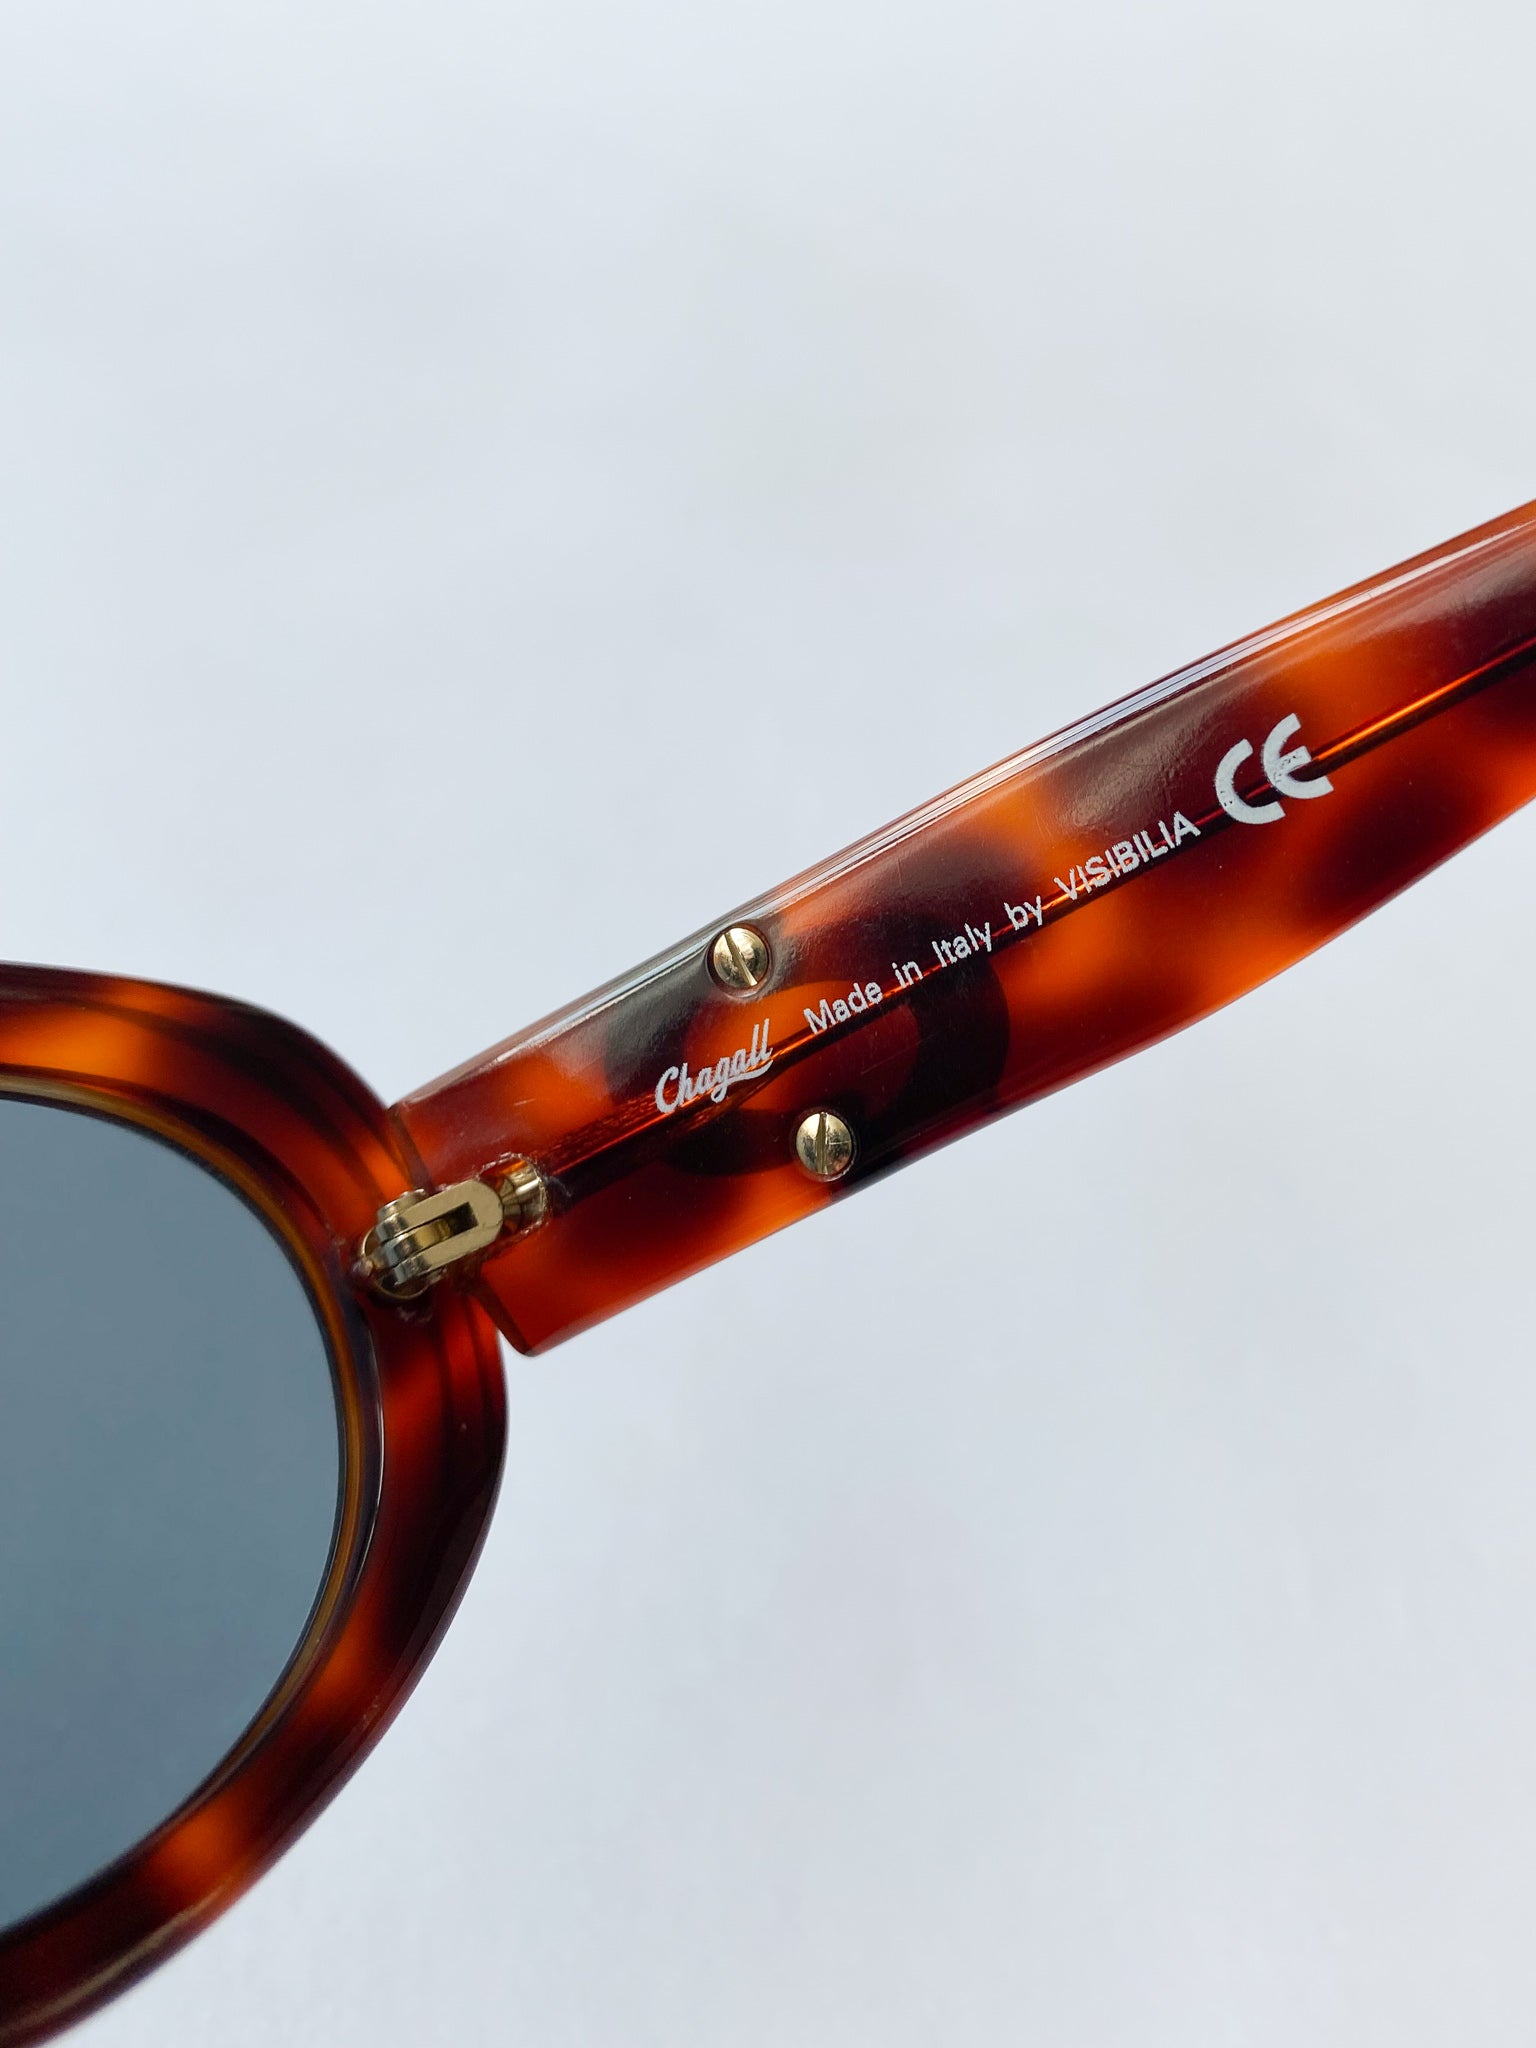 Chagall 70's sunglasses